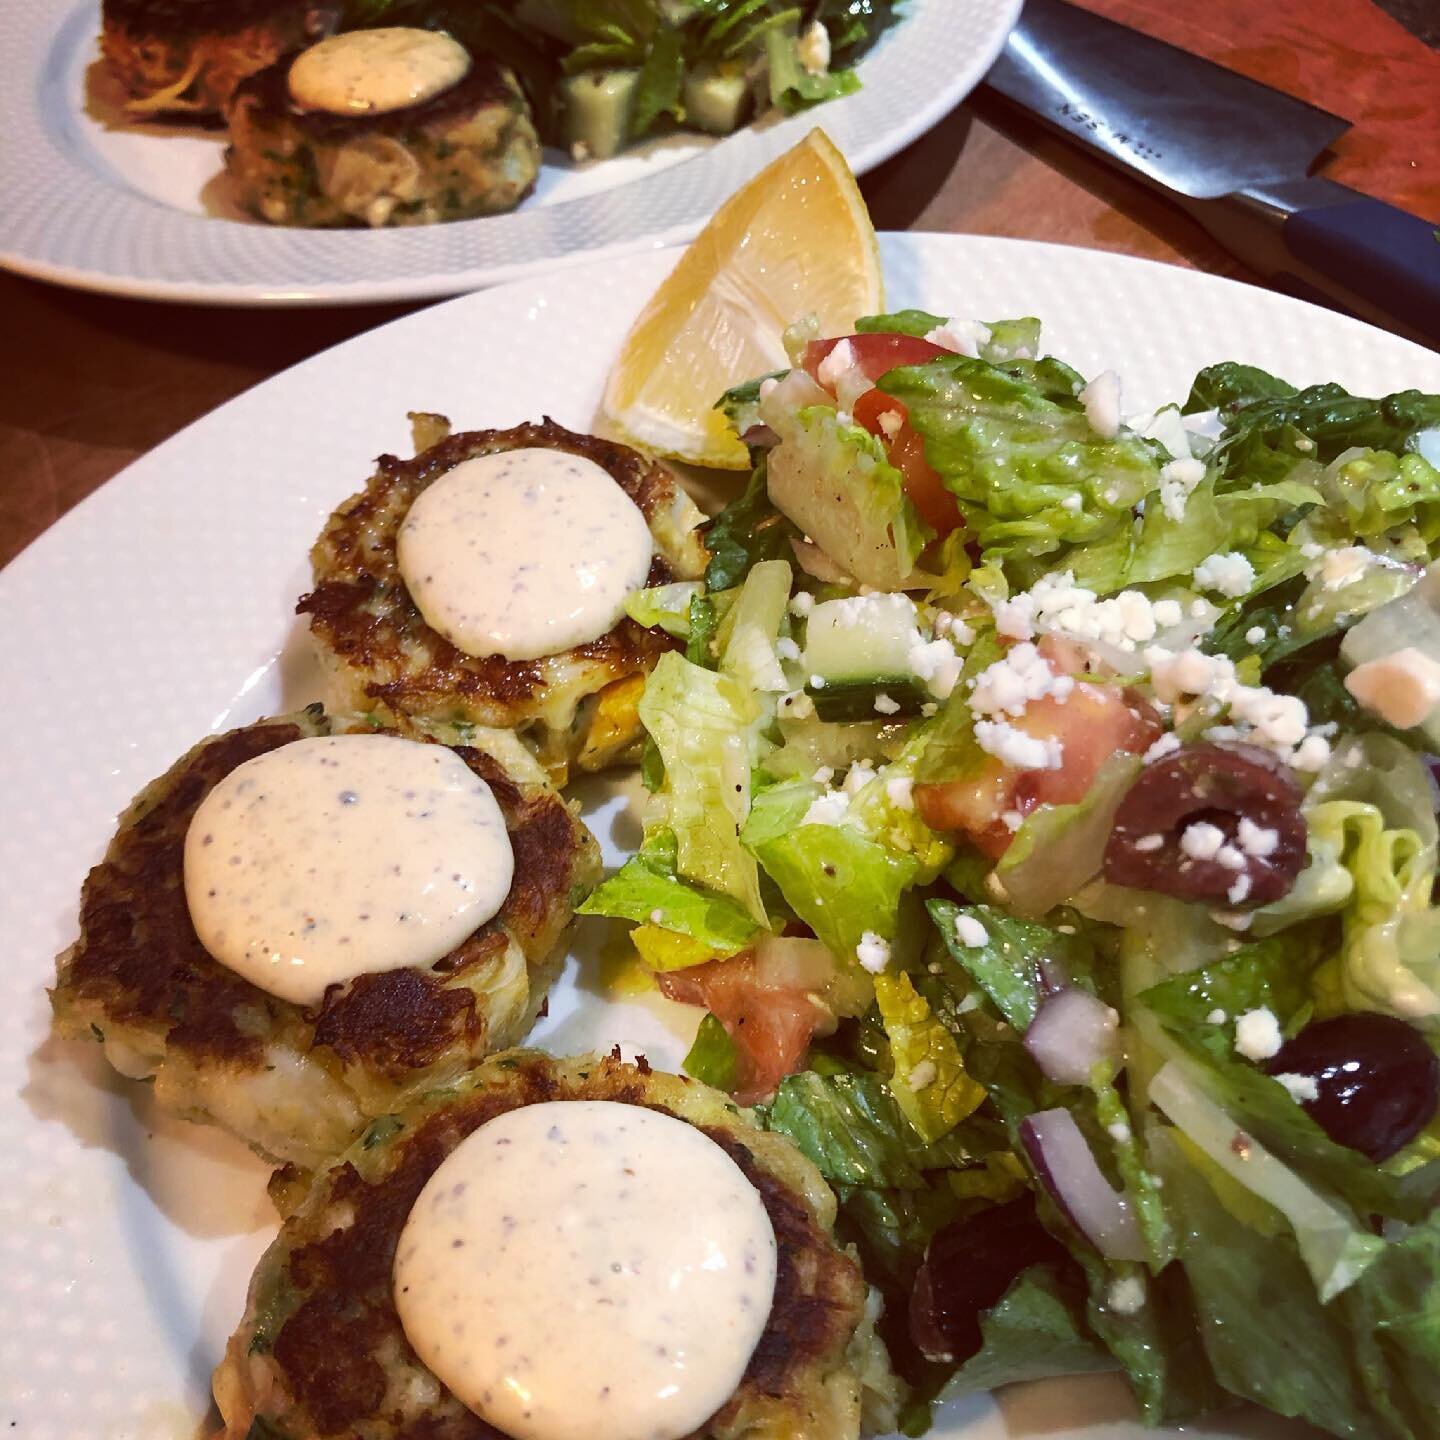 Jumbo Lump Crab Cakes with Grain Mustard Aioli and Greek Salad #crabcakes #chefsnightoff #greeksalad